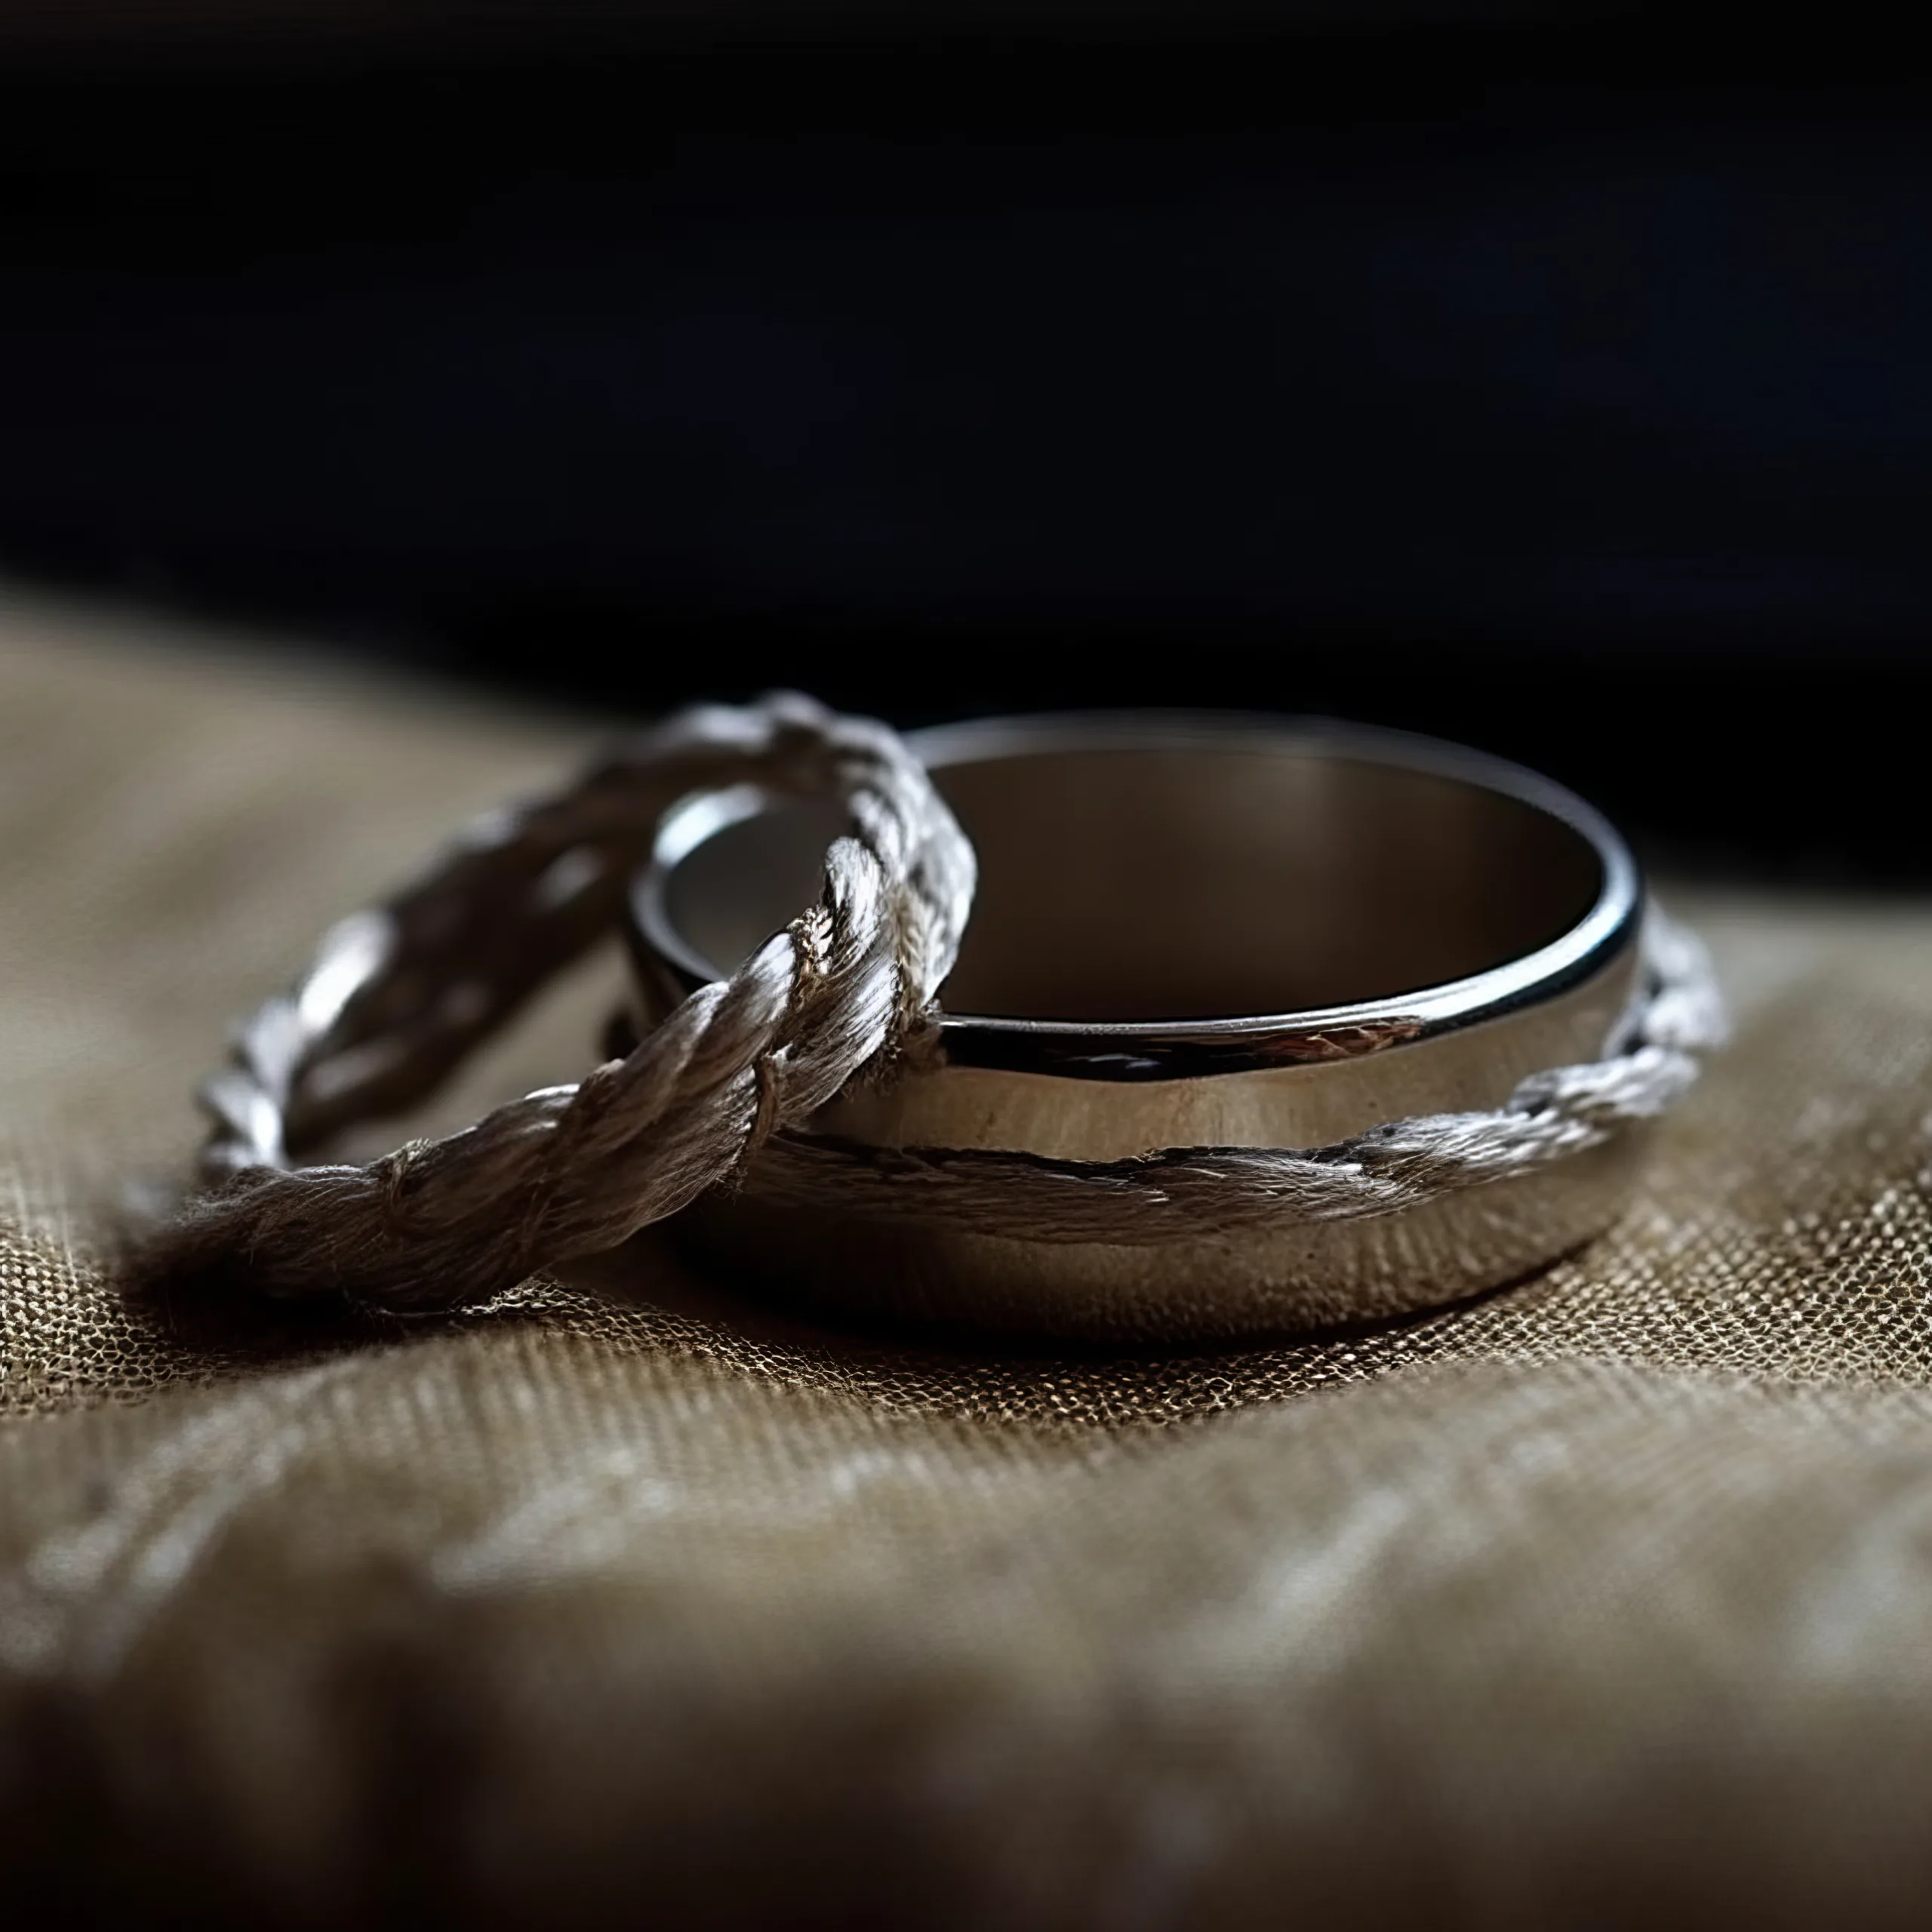 Wedding rings or a wedding cake